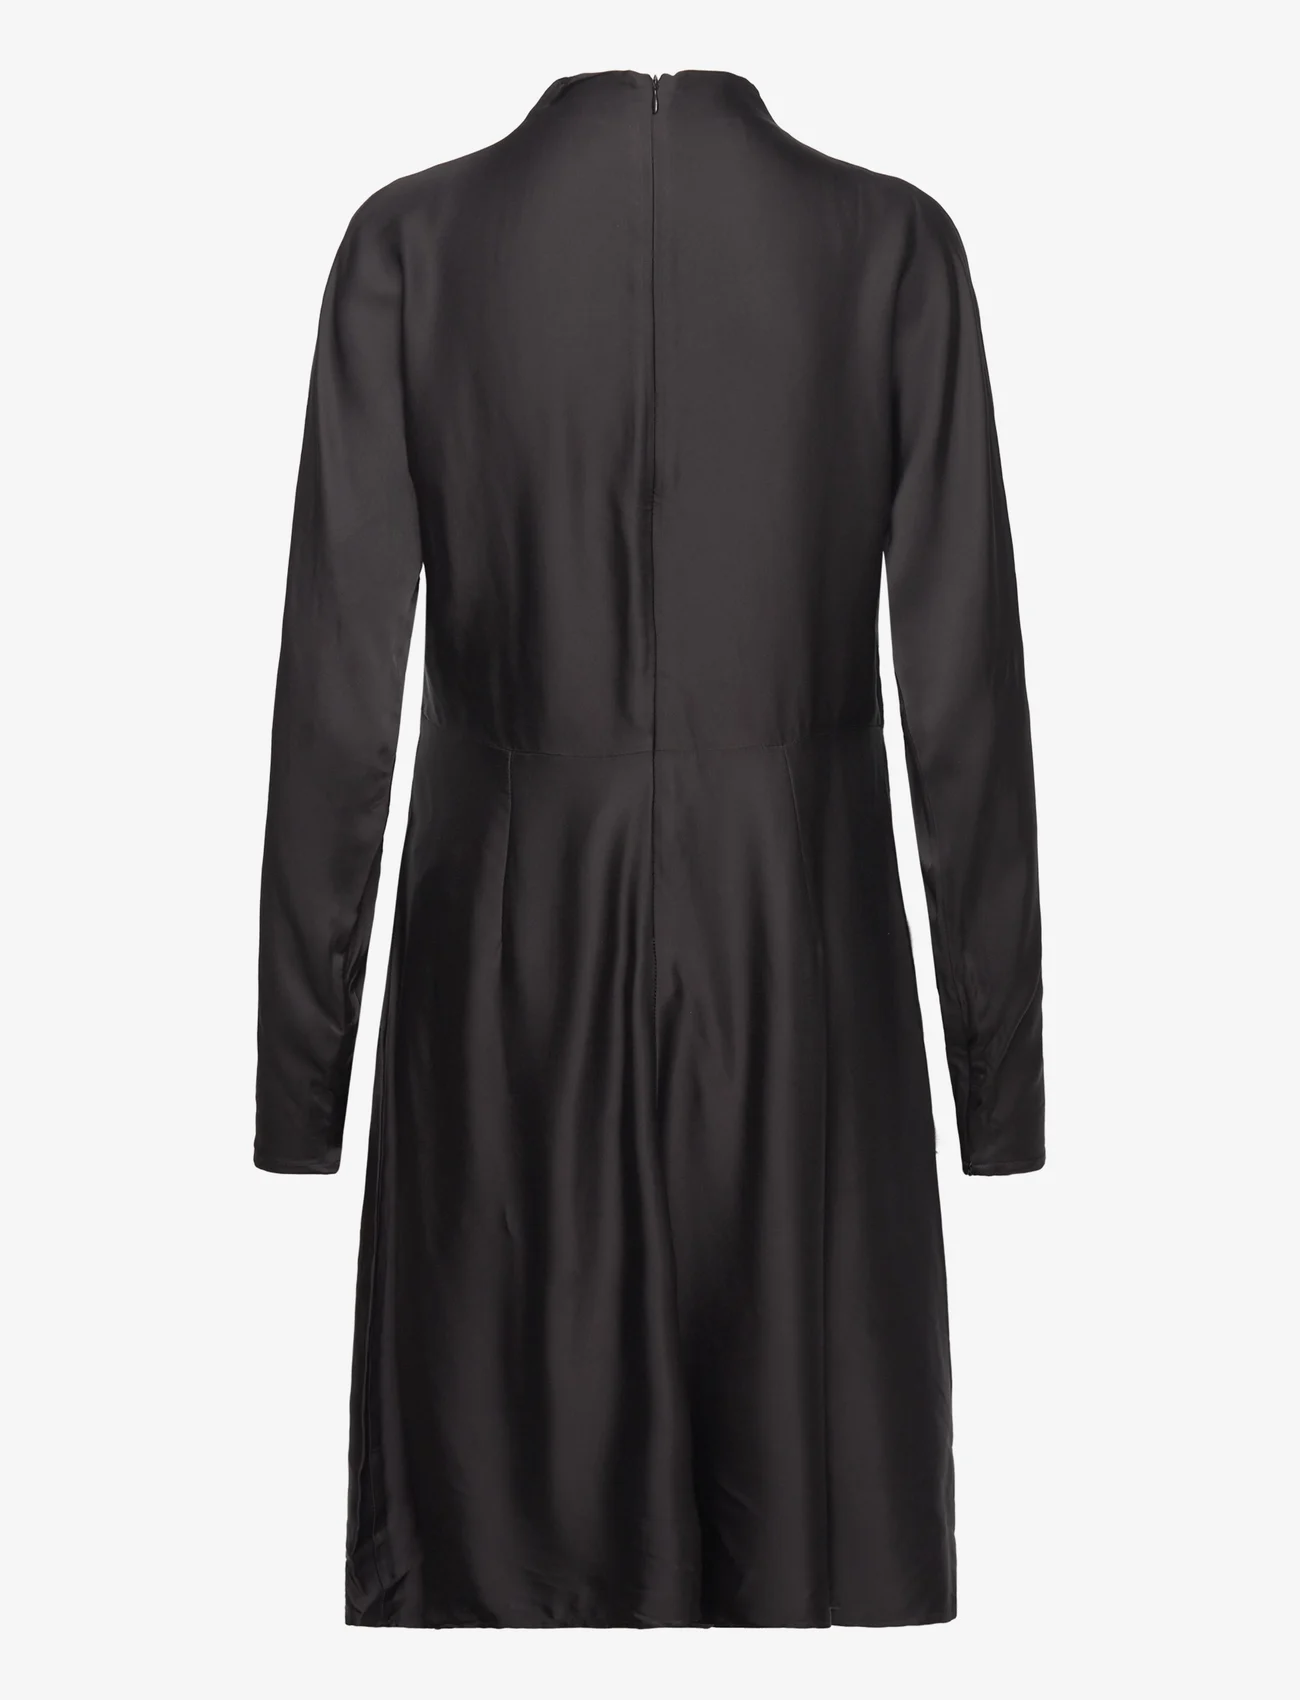 Selected Femme - SLFALANA LS SHORT SATIN DRESS B - midikjoler - black - 1